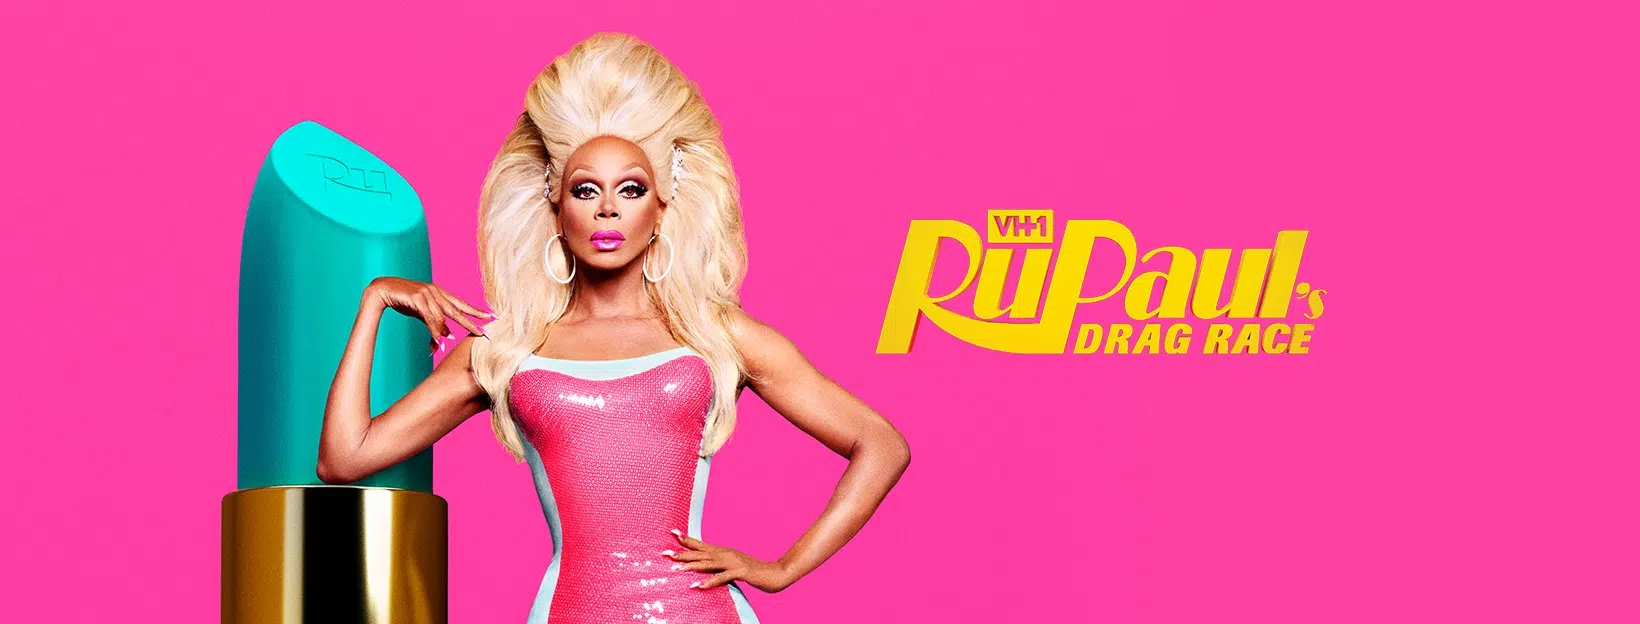 RuPaul Announces "Drag Race Live" Las Vegas Residency 